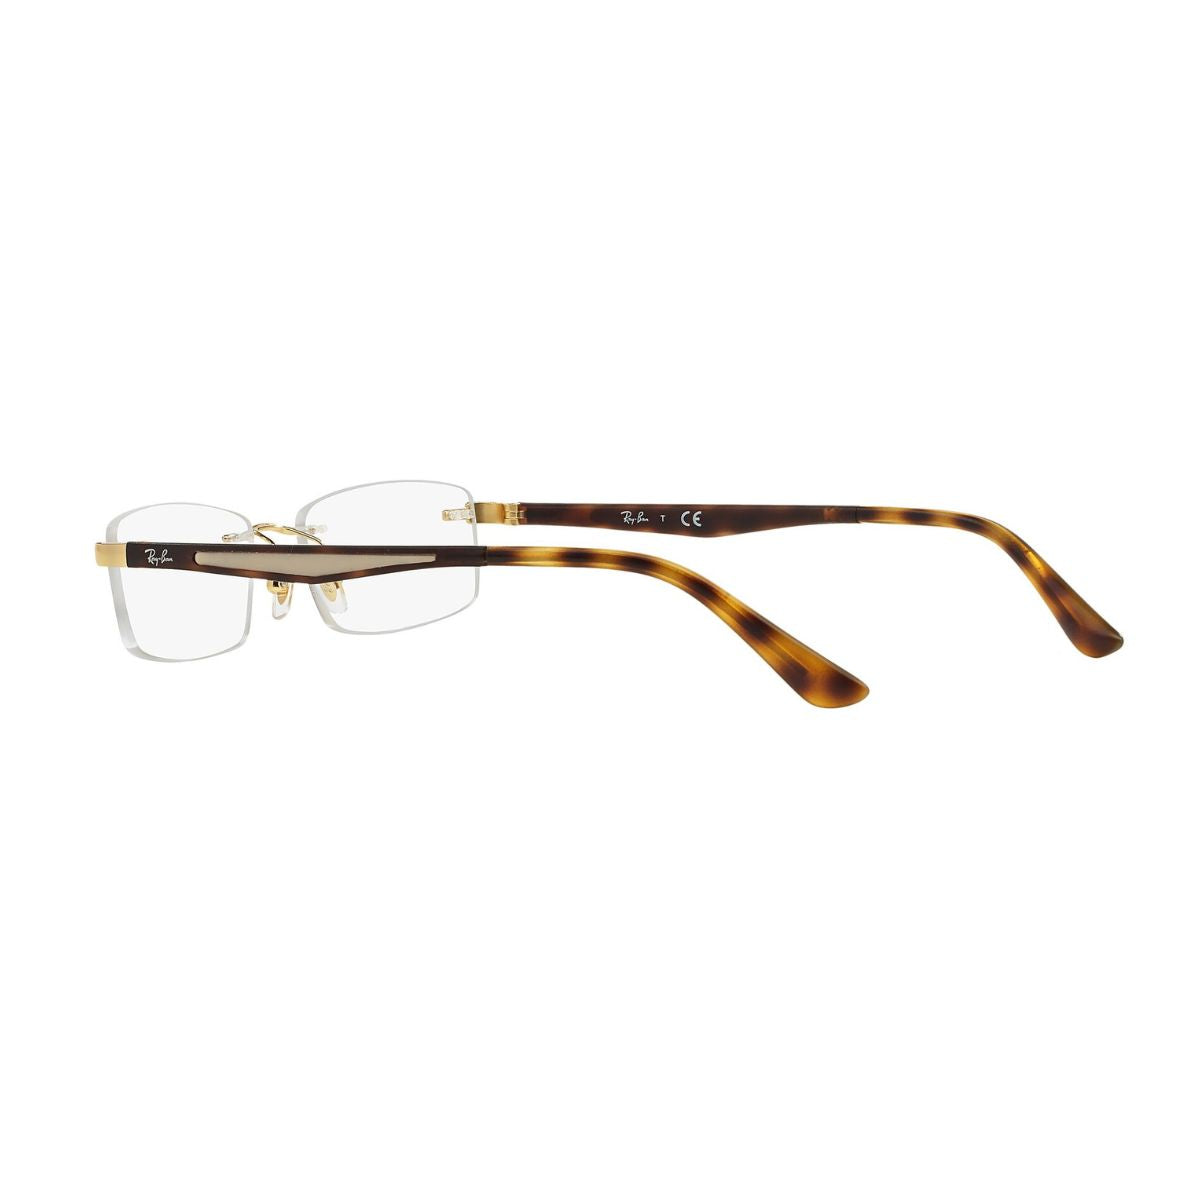 " Rayban 6326I 2500 rectangle eyeglasses frame for men and women at optorium"